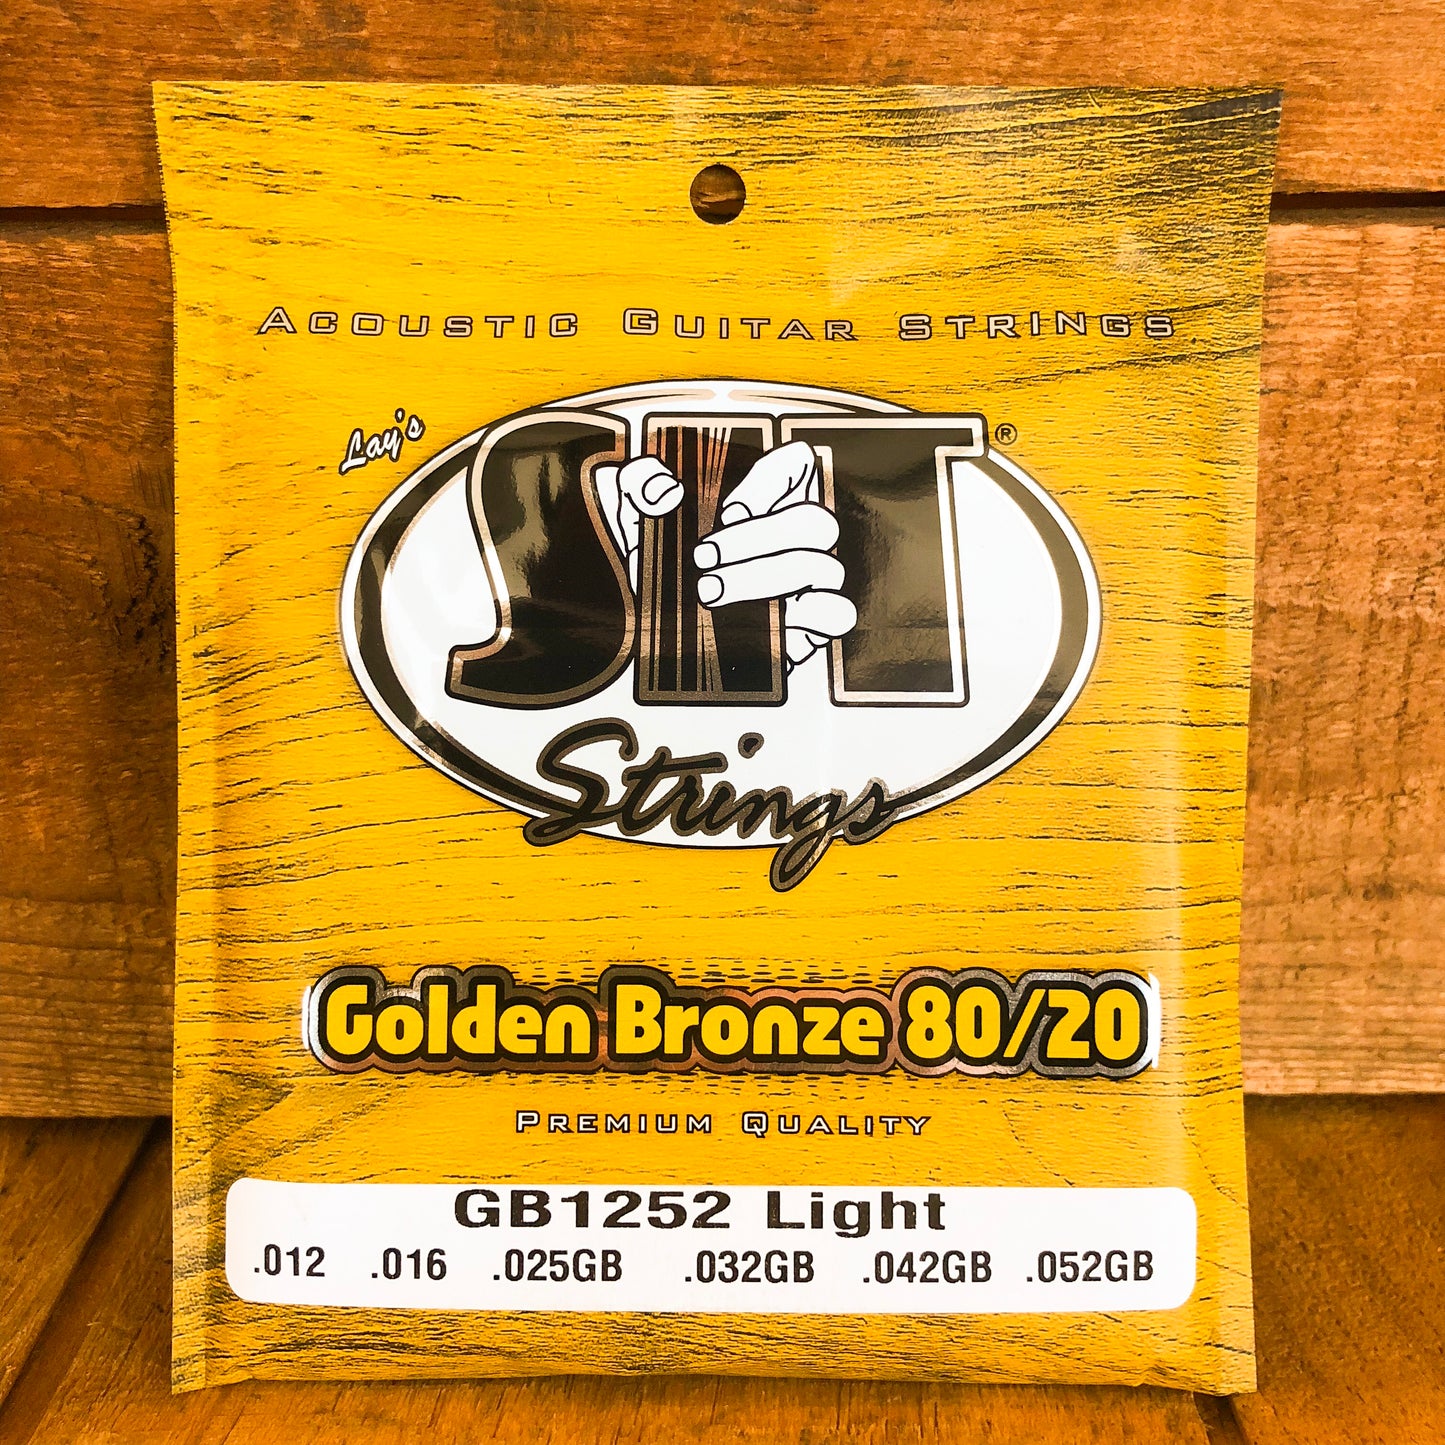 S.I.T. Golden Bronze 80/20 Acoustic Guitar Strings